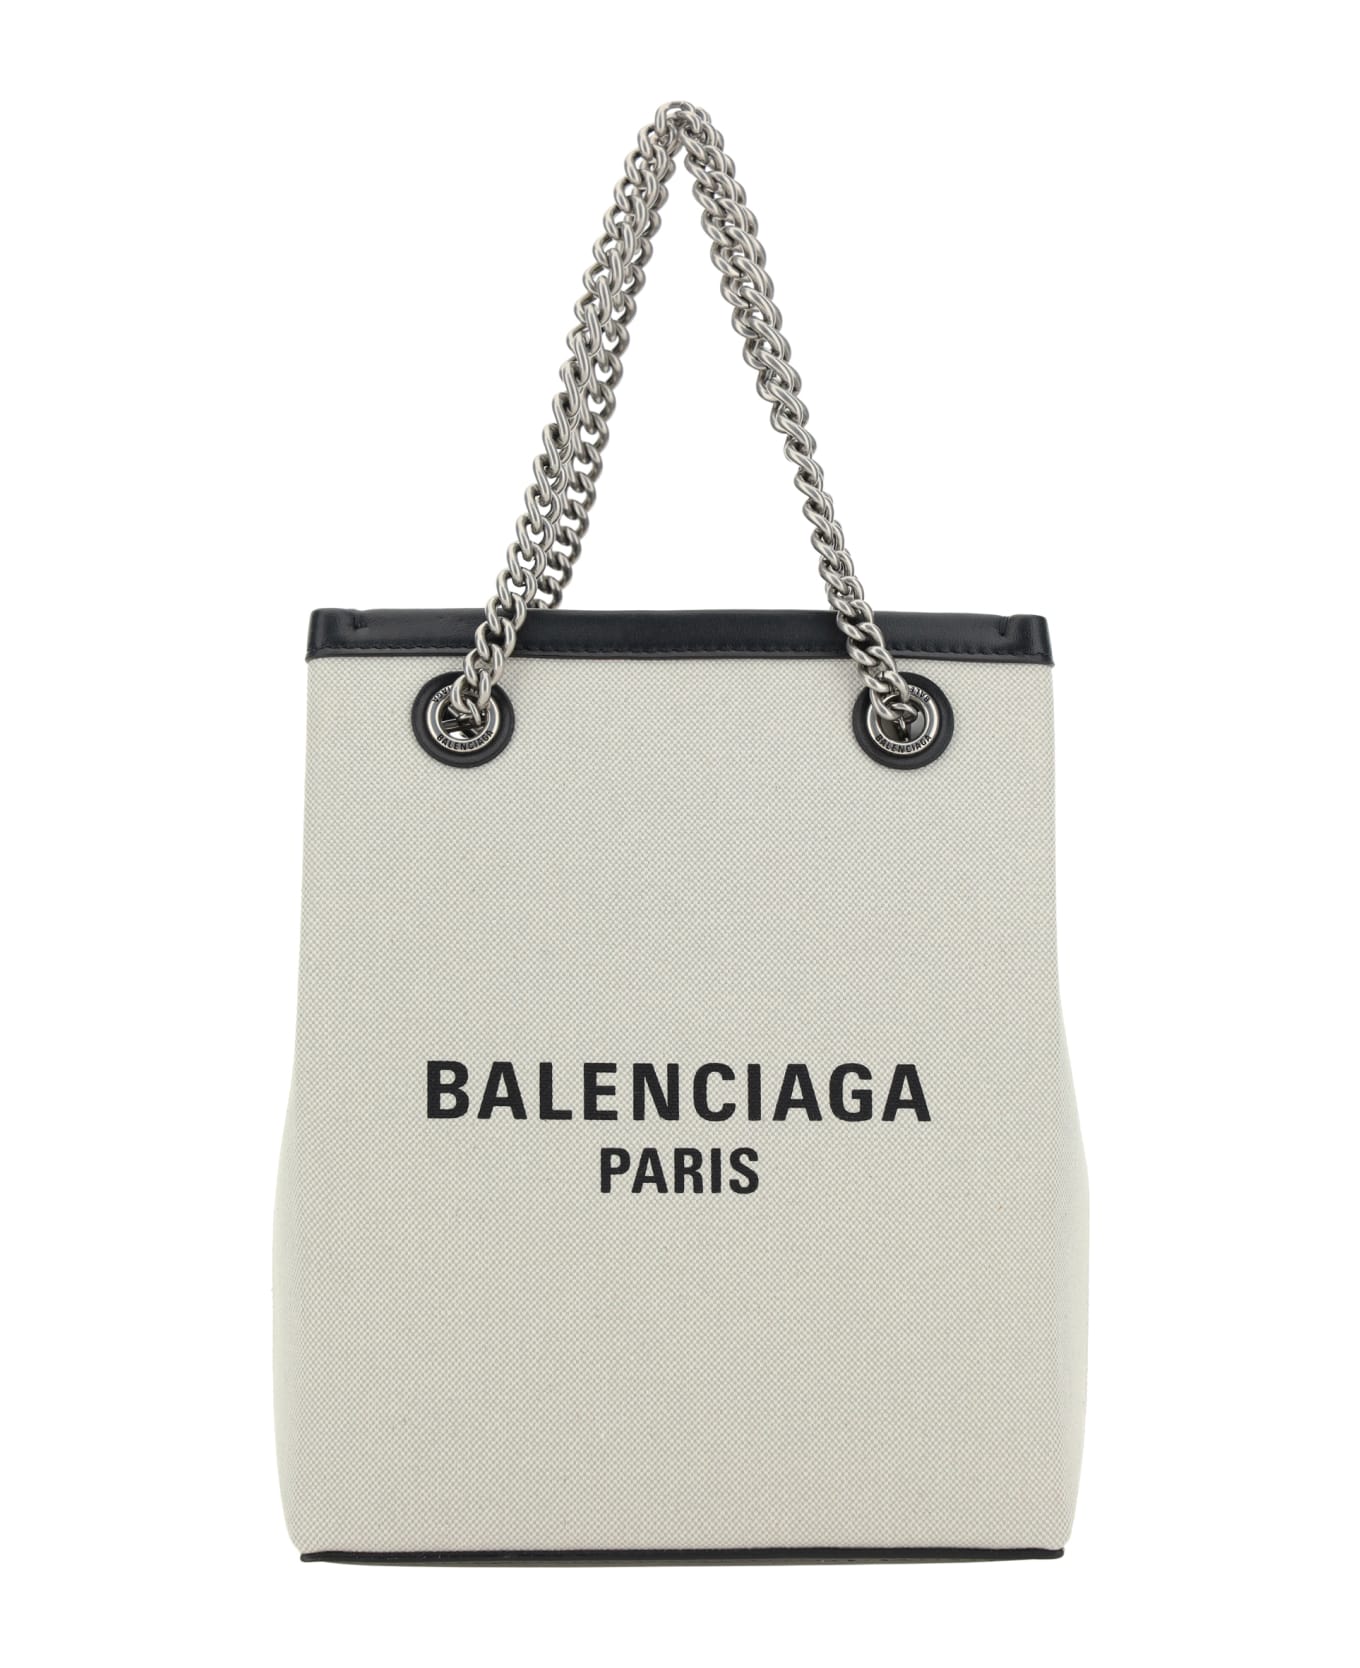 Balenciaga Duty Free Handbag - Naturel